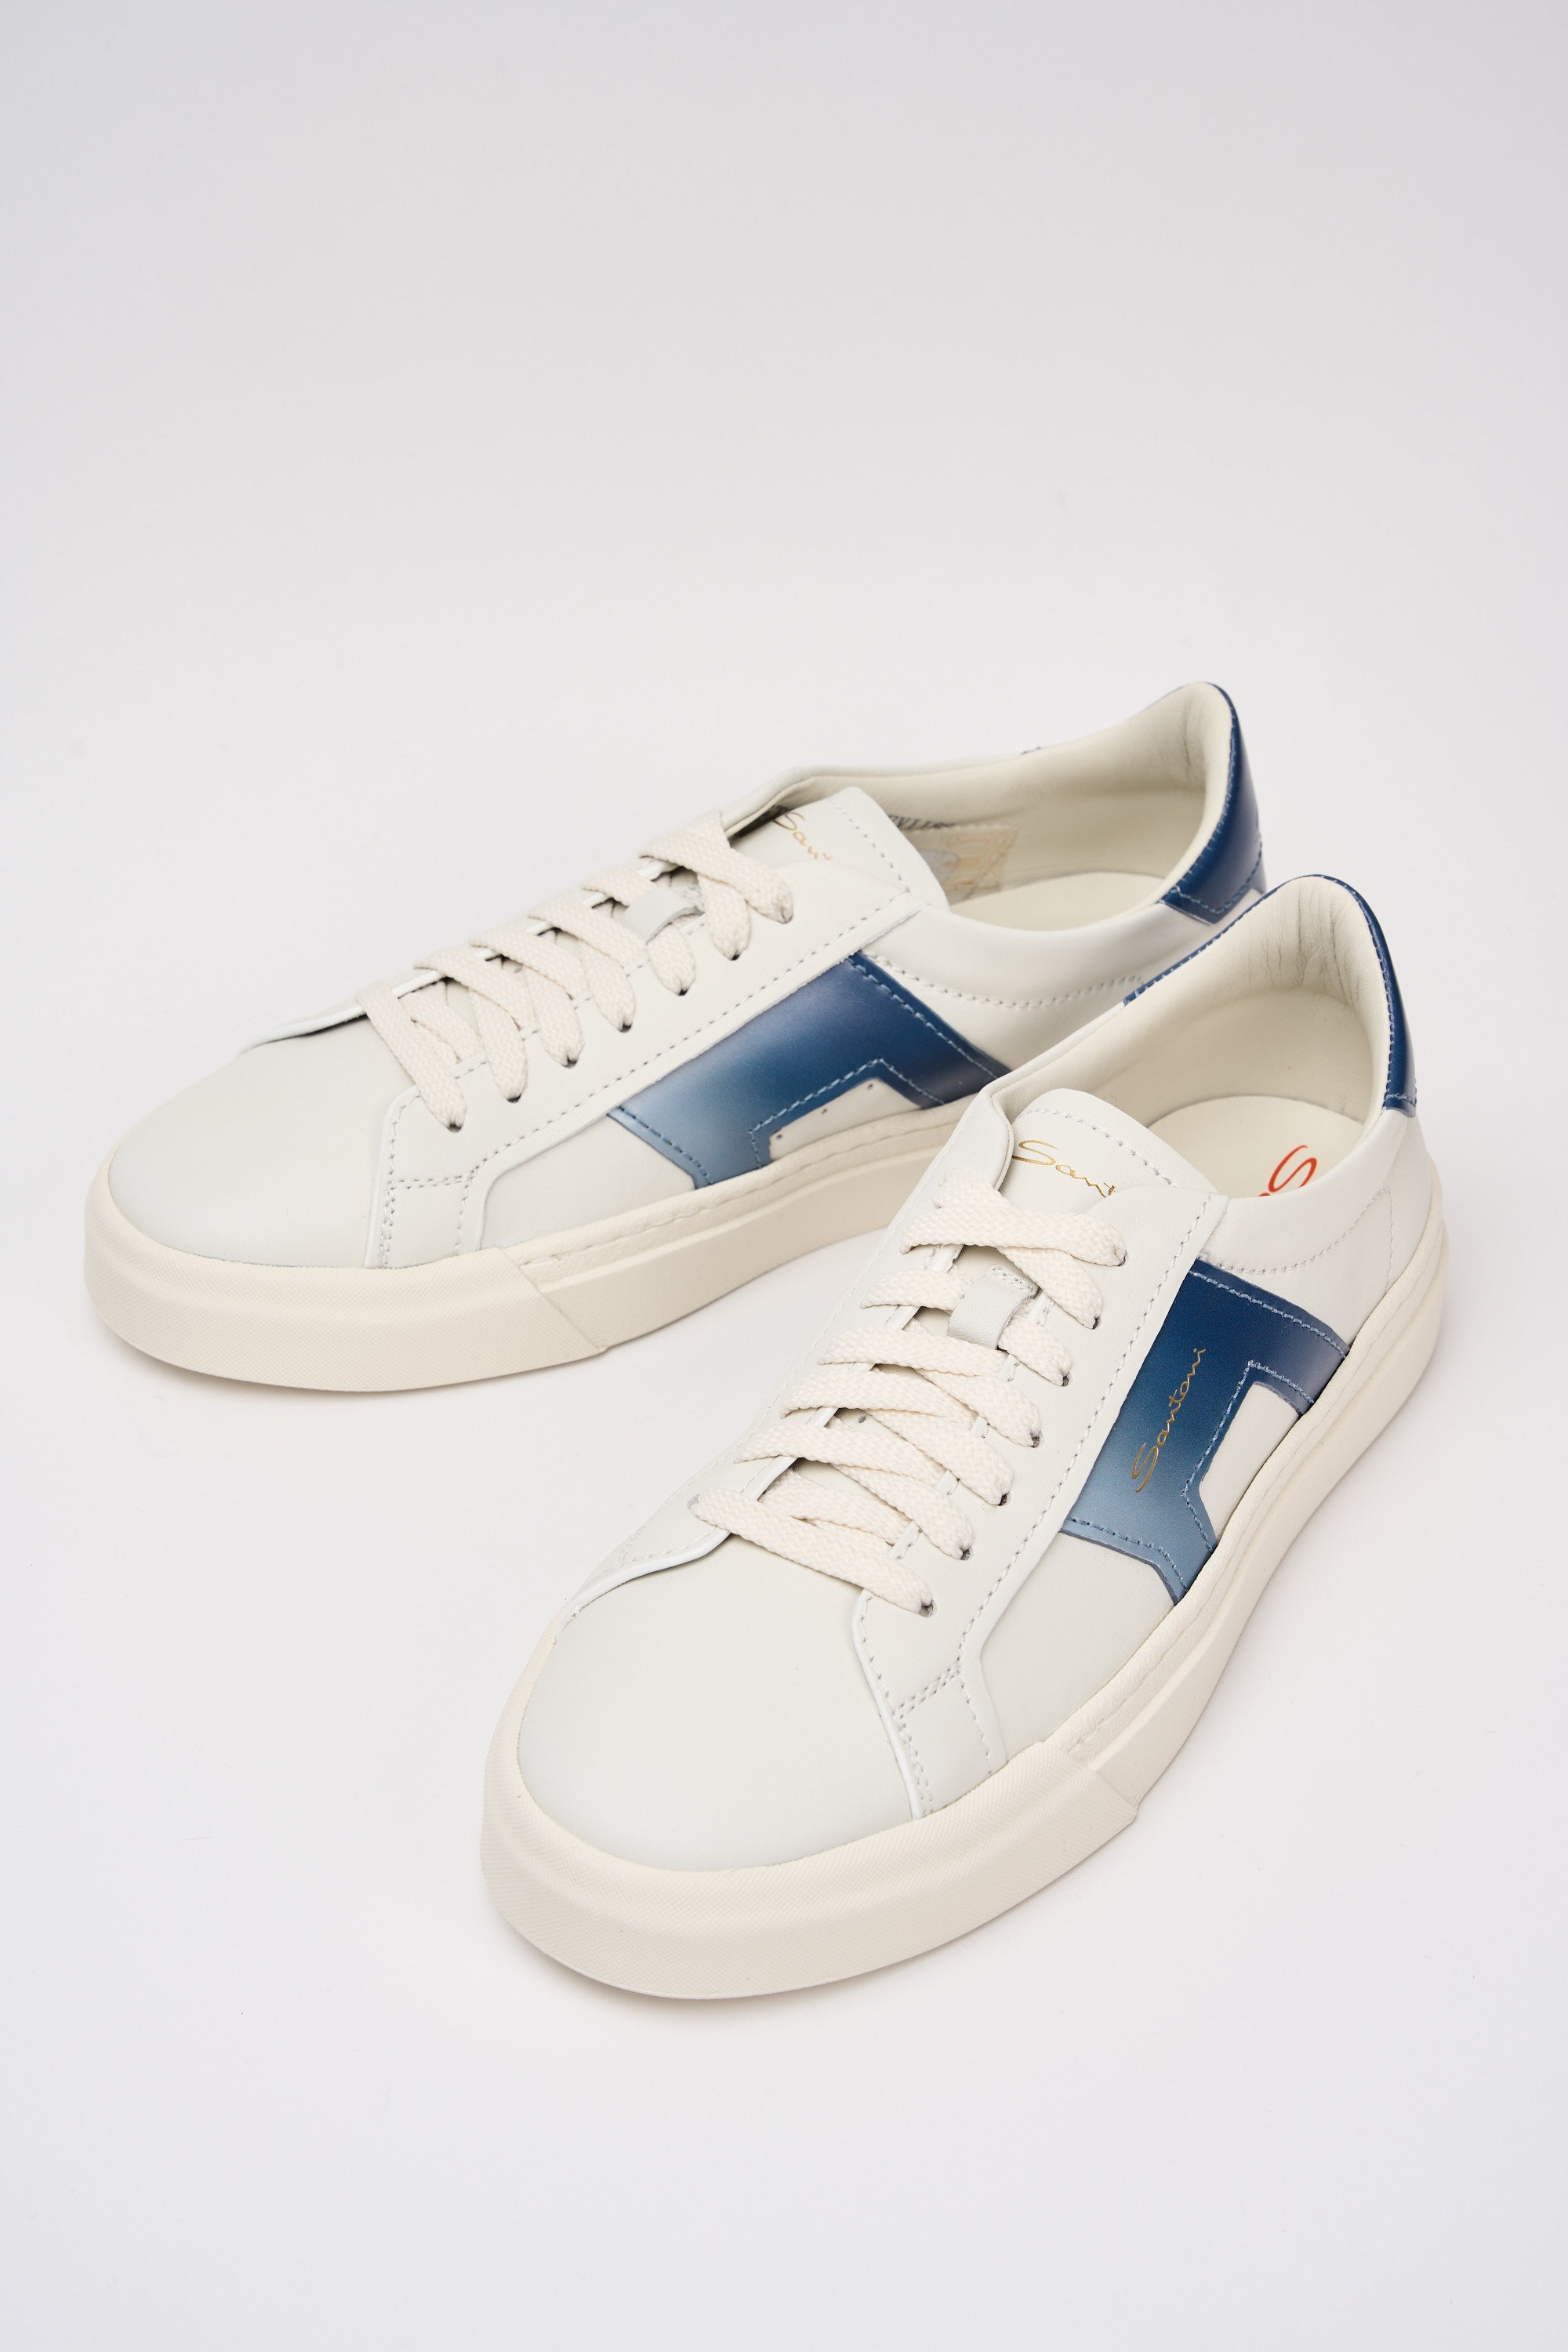 Santoni Sneaker Double Buckle White Leather-7